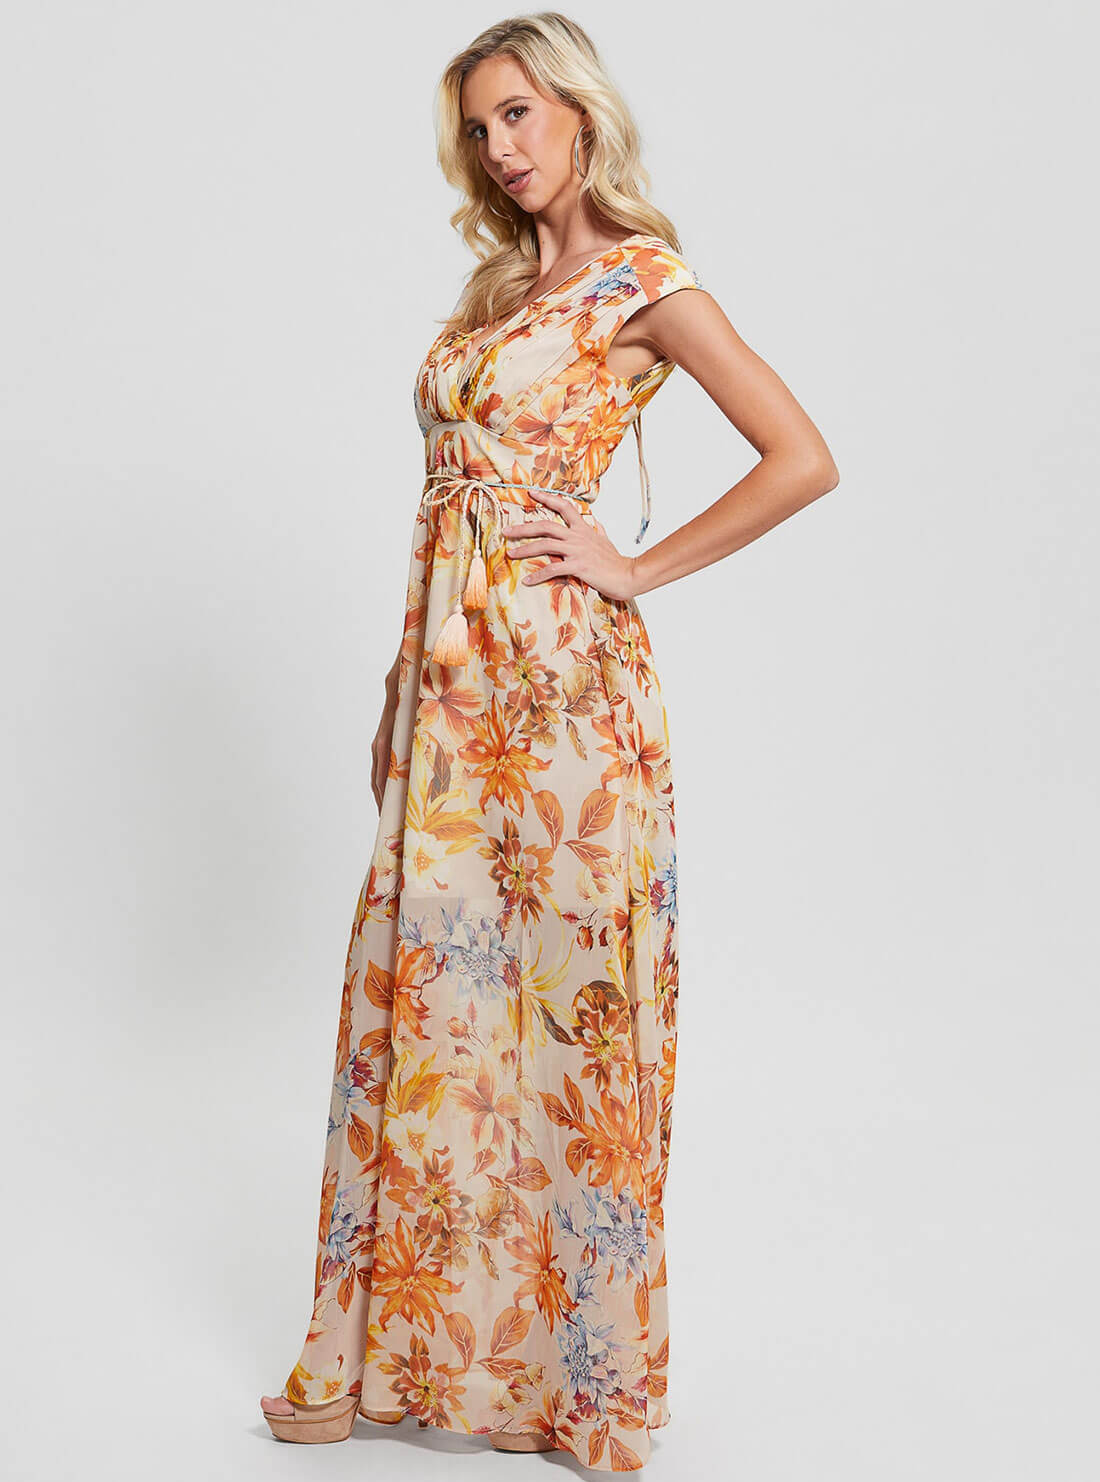 Orange Floral Gilda Maxi Dress | GUESS Women's Apparel | front view